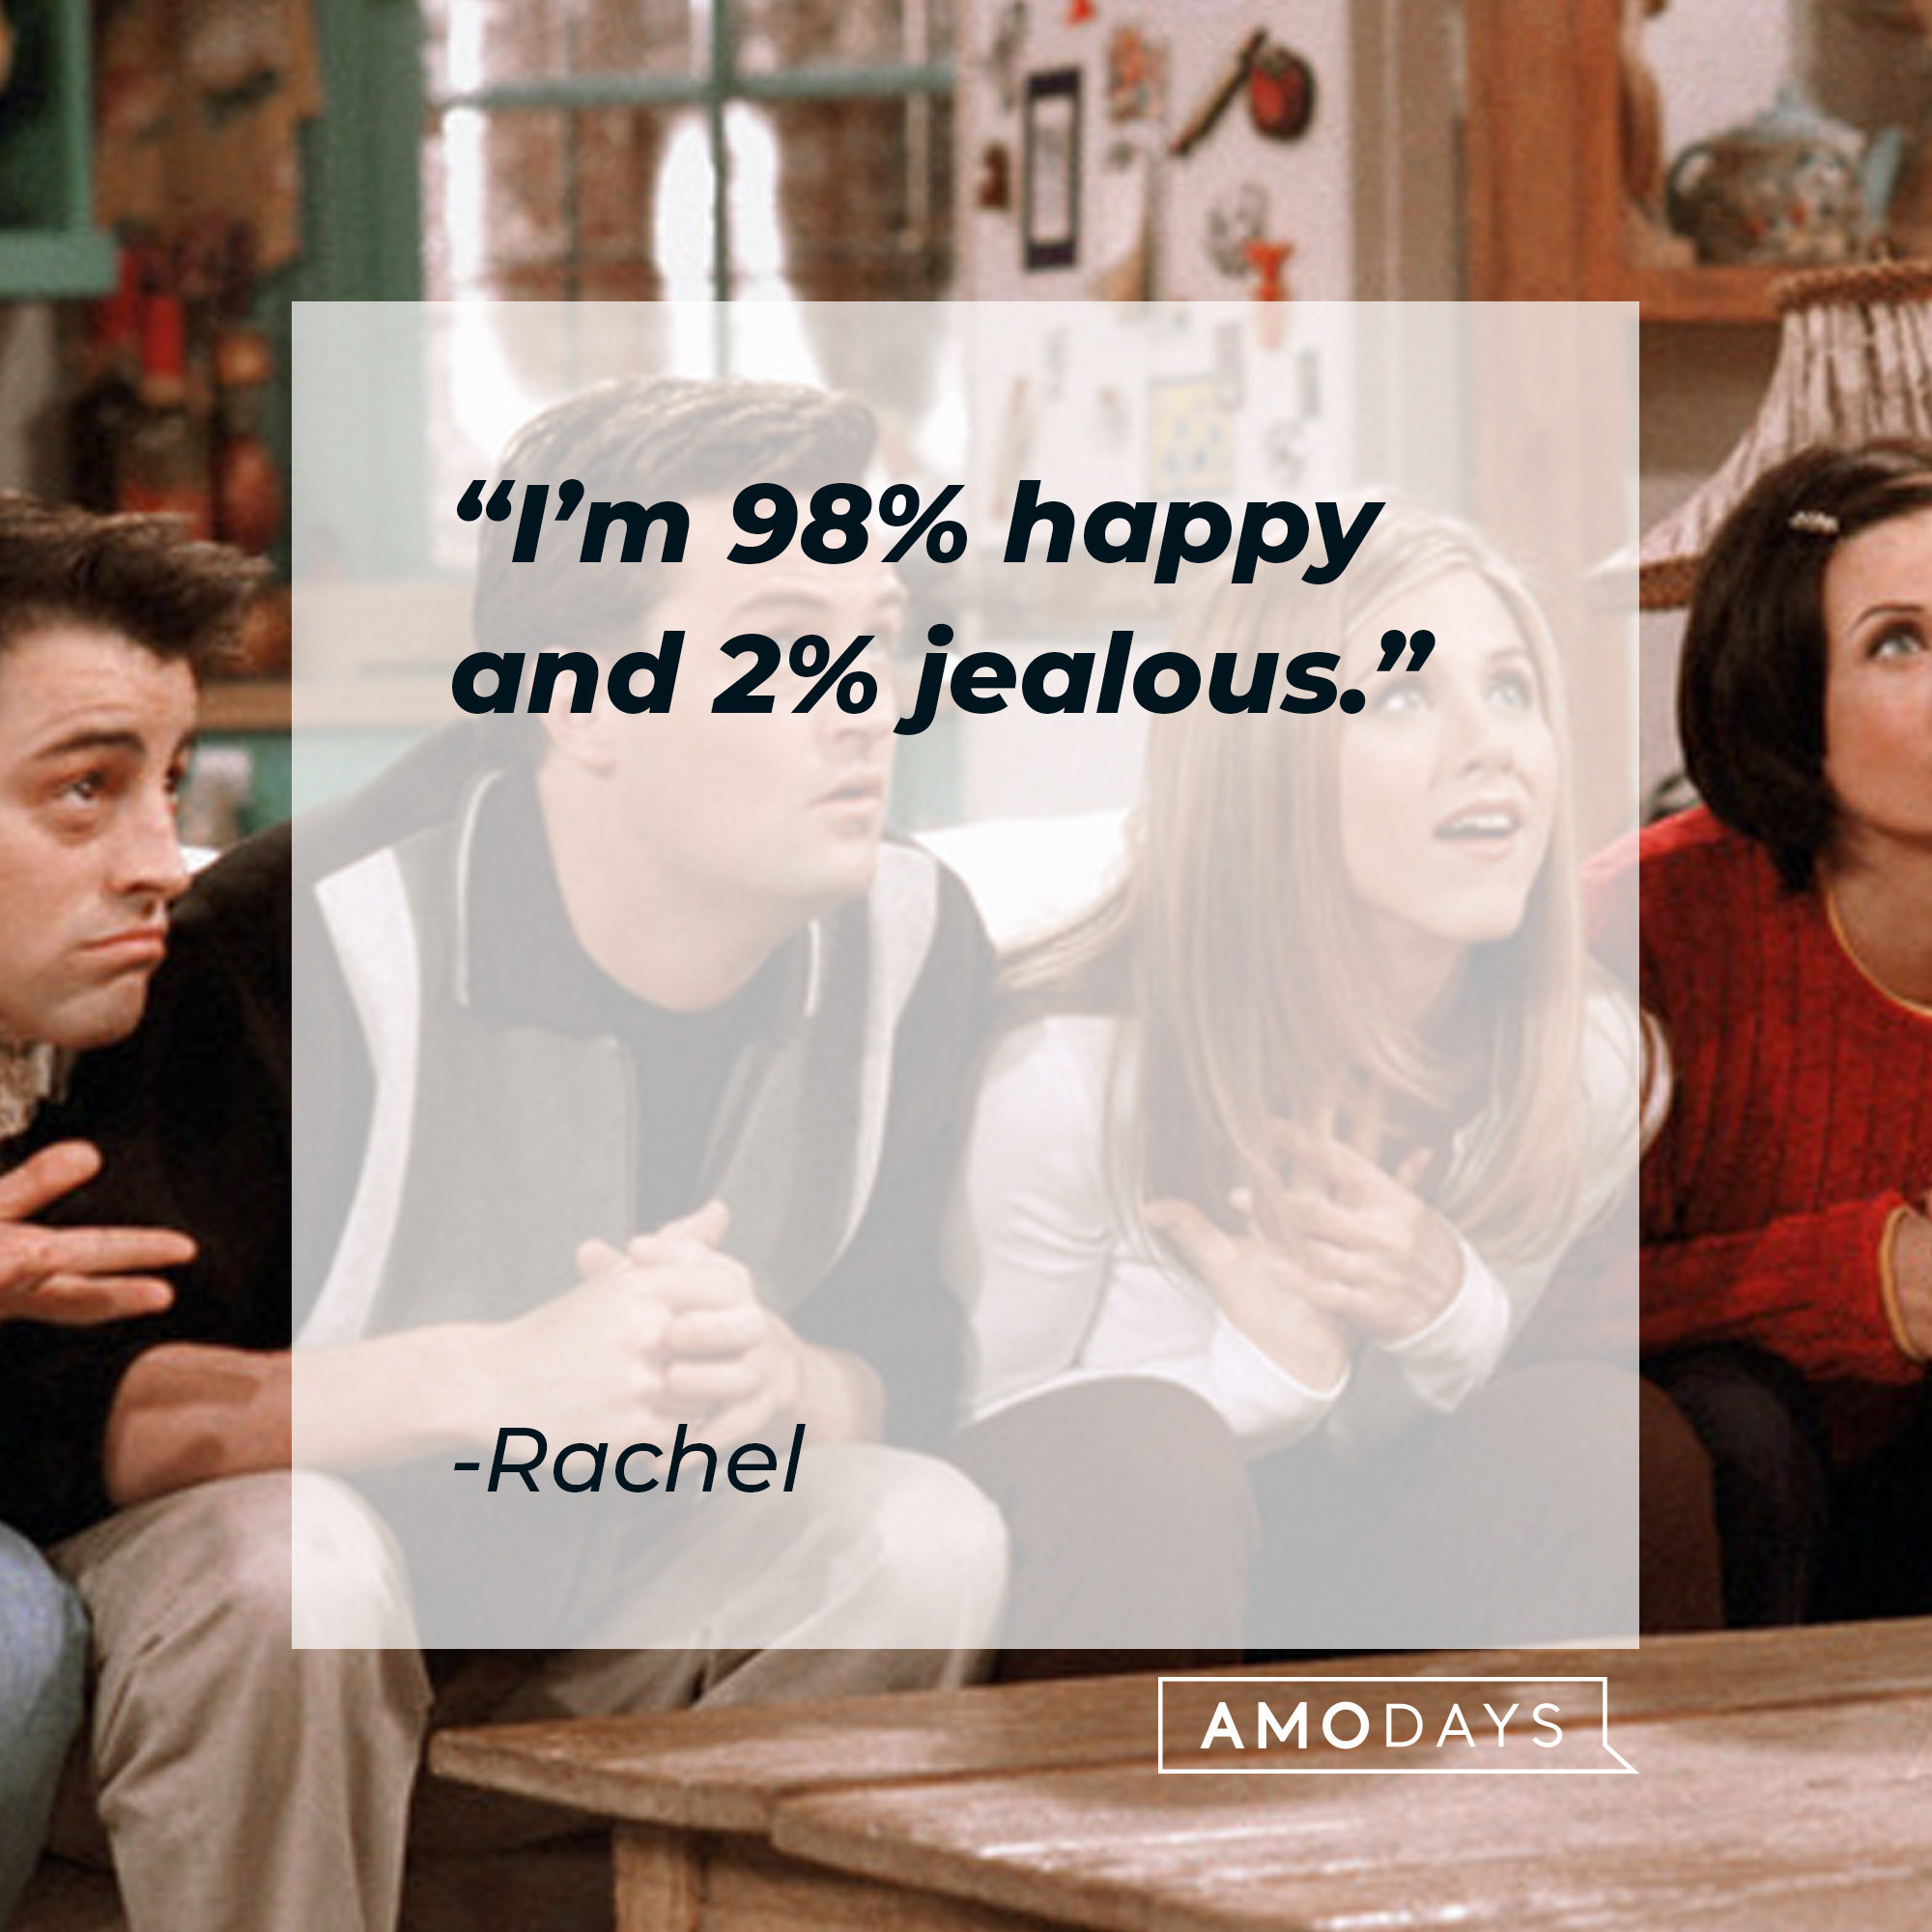 Rachel's quote: “I’m 98% happy and 2% jealous.” | Source: facebook.com/friends.tv